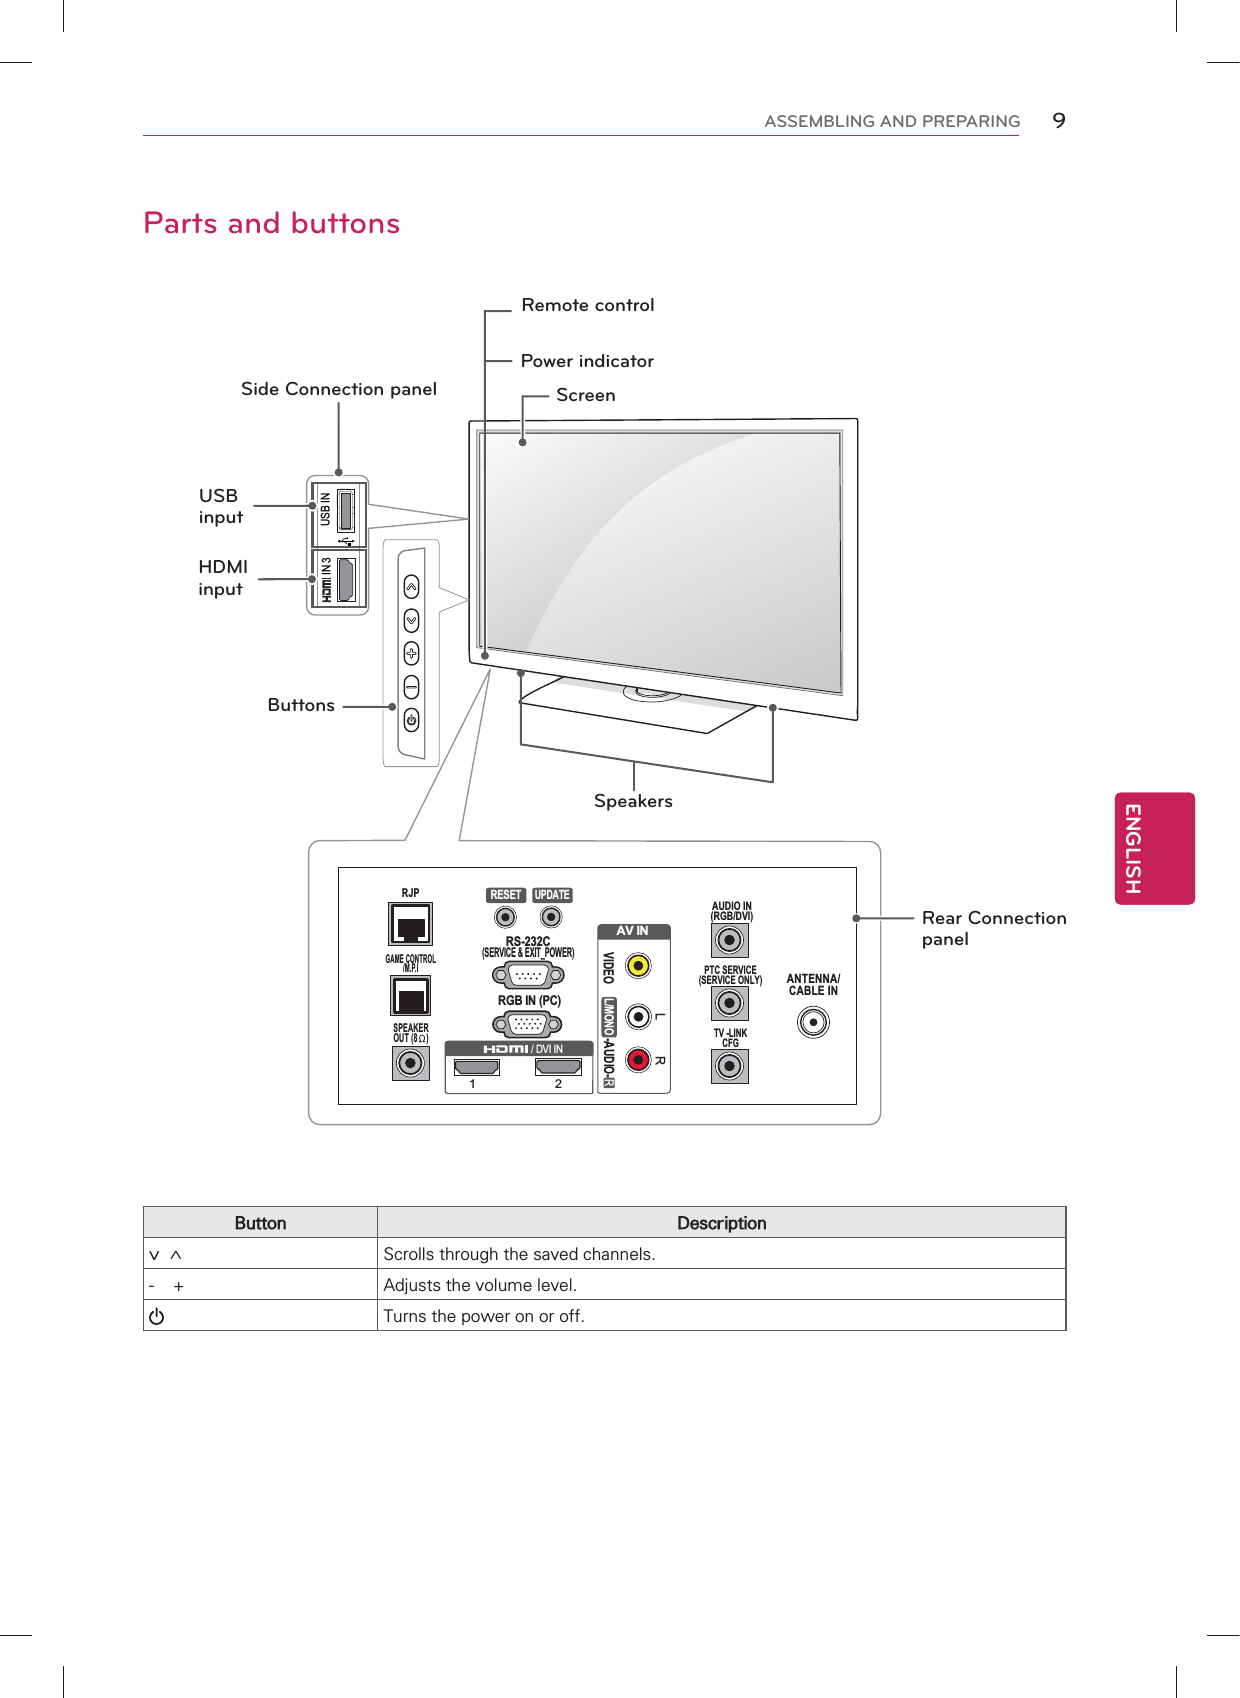 9ENGENGLISHASSEMBLING AND PREPARINGParts and buttonsUSB ININ 3 ANTENNA/CABLE INAV INVIDEOL/MONO-AUDIO-RLRAUDIO IN(RGB/DVI)21/ DVI INRS-232C(SERVICE &amp; EXIT_POWER)RGB IN (PC)RJPGAME CONTROL/M.P.ISPEAKEROUT (8    )RESETUPDATEPTC SERVICE(SERVICE ONLY)TV -LINKCFGUSB inputHDMI inputScreenRear Connection panelButtonsSide Connection panelSpeakersRemote controlPower indicator0 -+YA6FUROOVWKURXJKWKHVDYHGFKDQQHOV $GMXVWVWKHYROXPHOHYHO 7XUQVWKHSRZHURQRURII